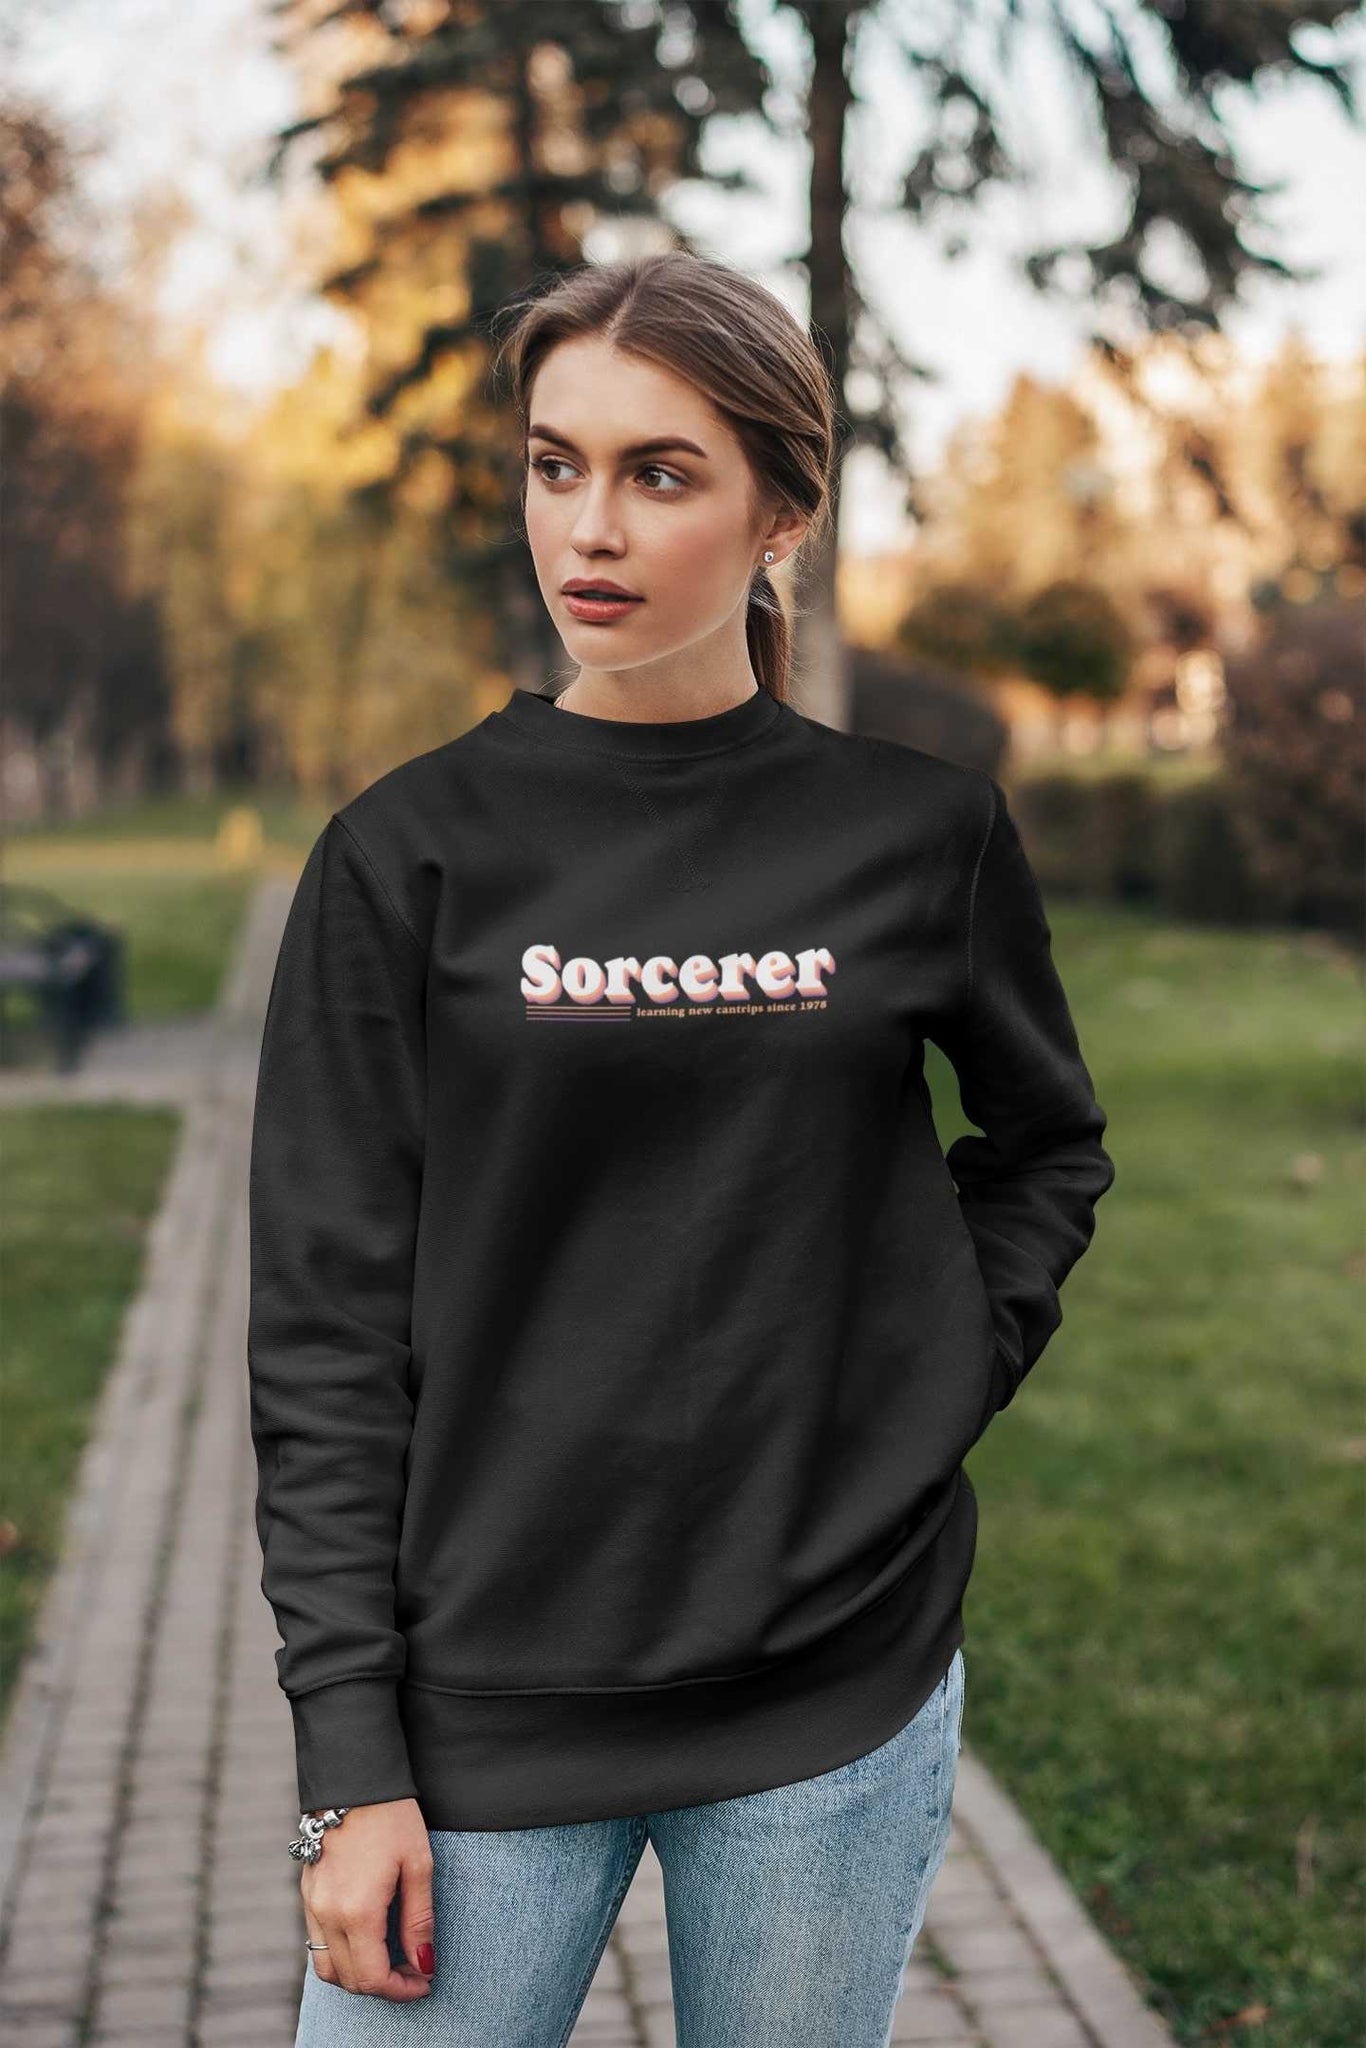 Sorcerer Unisex Sweatshirts